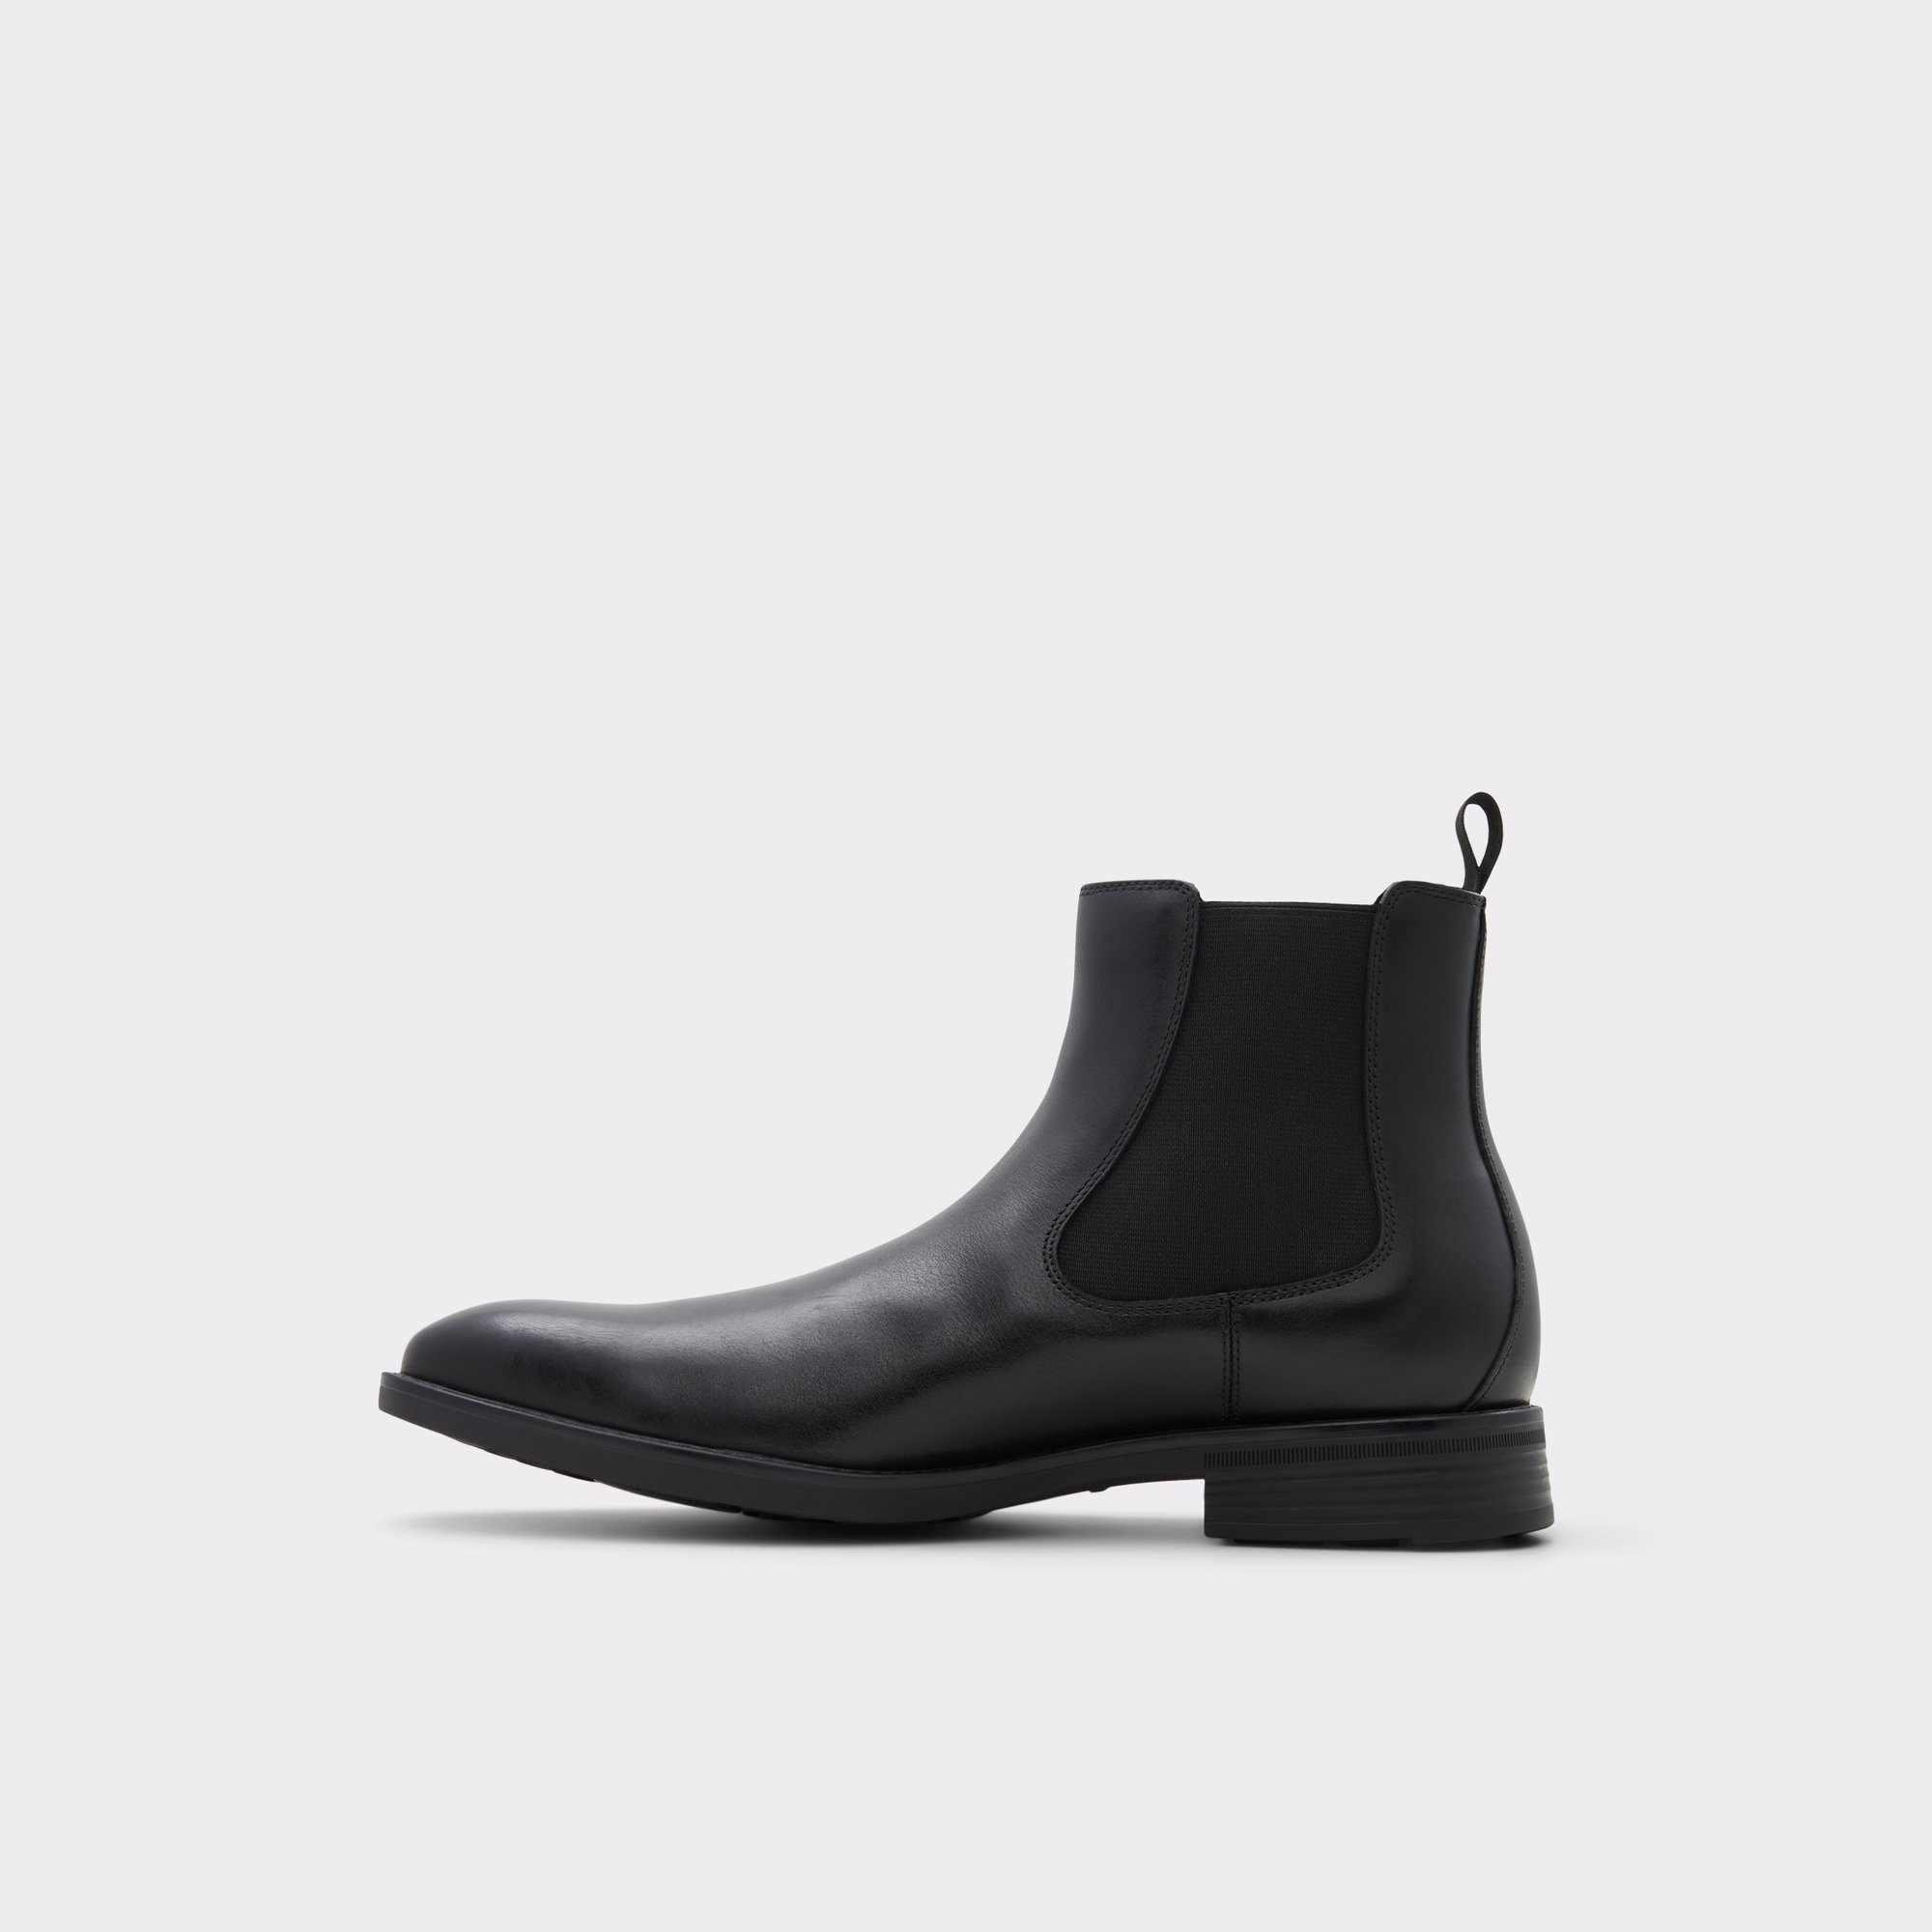 Chambers Black Men's Dress boots | ALDO US